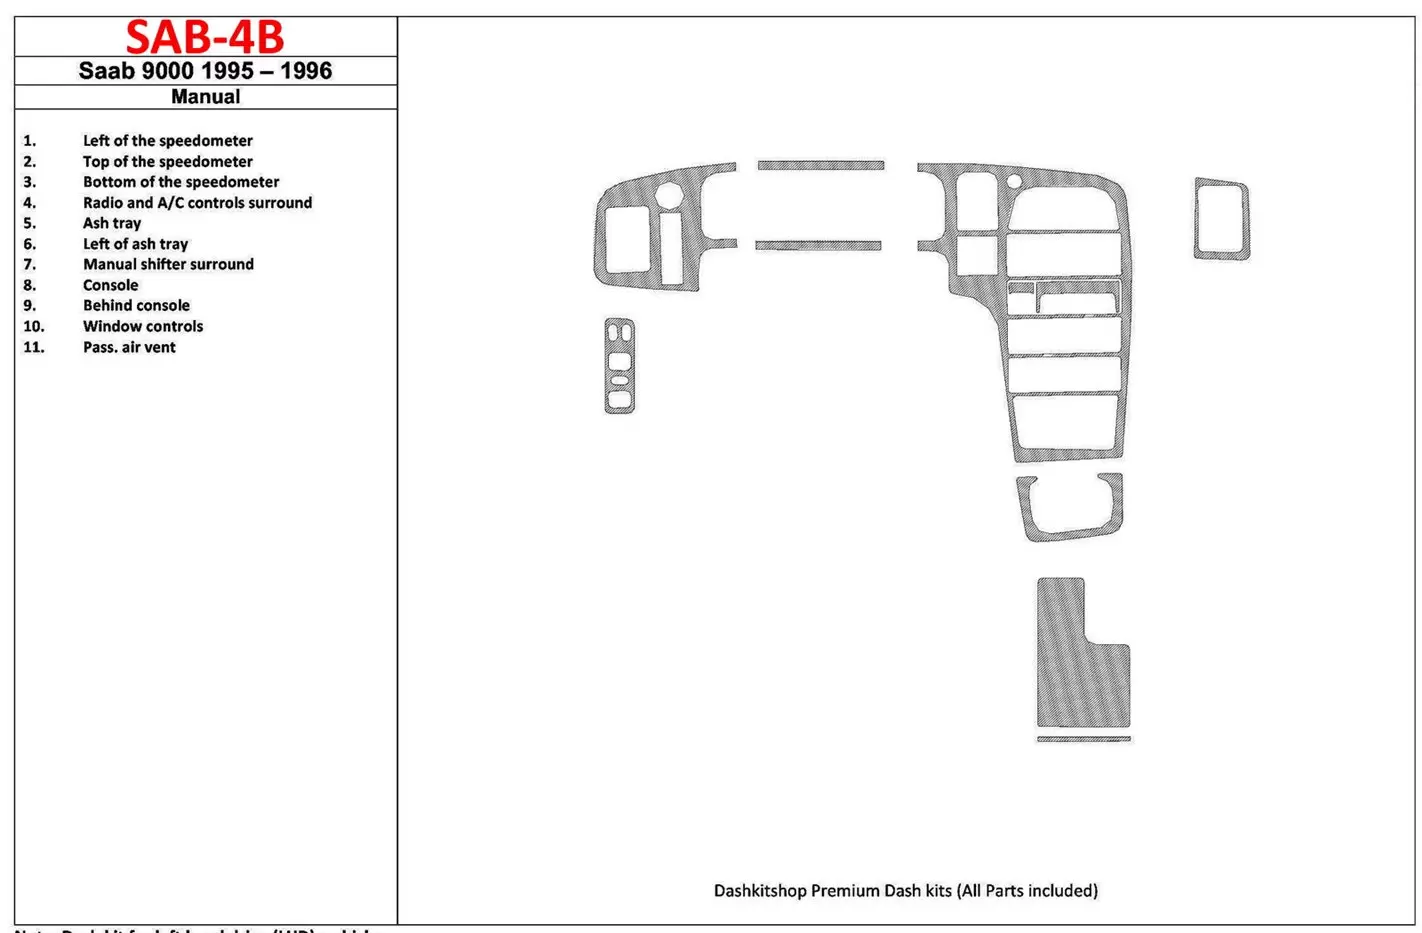 Saab 9000 1995-1996 Manual Gearbox, 11 Parts set Interior BD Dash Trim Kit